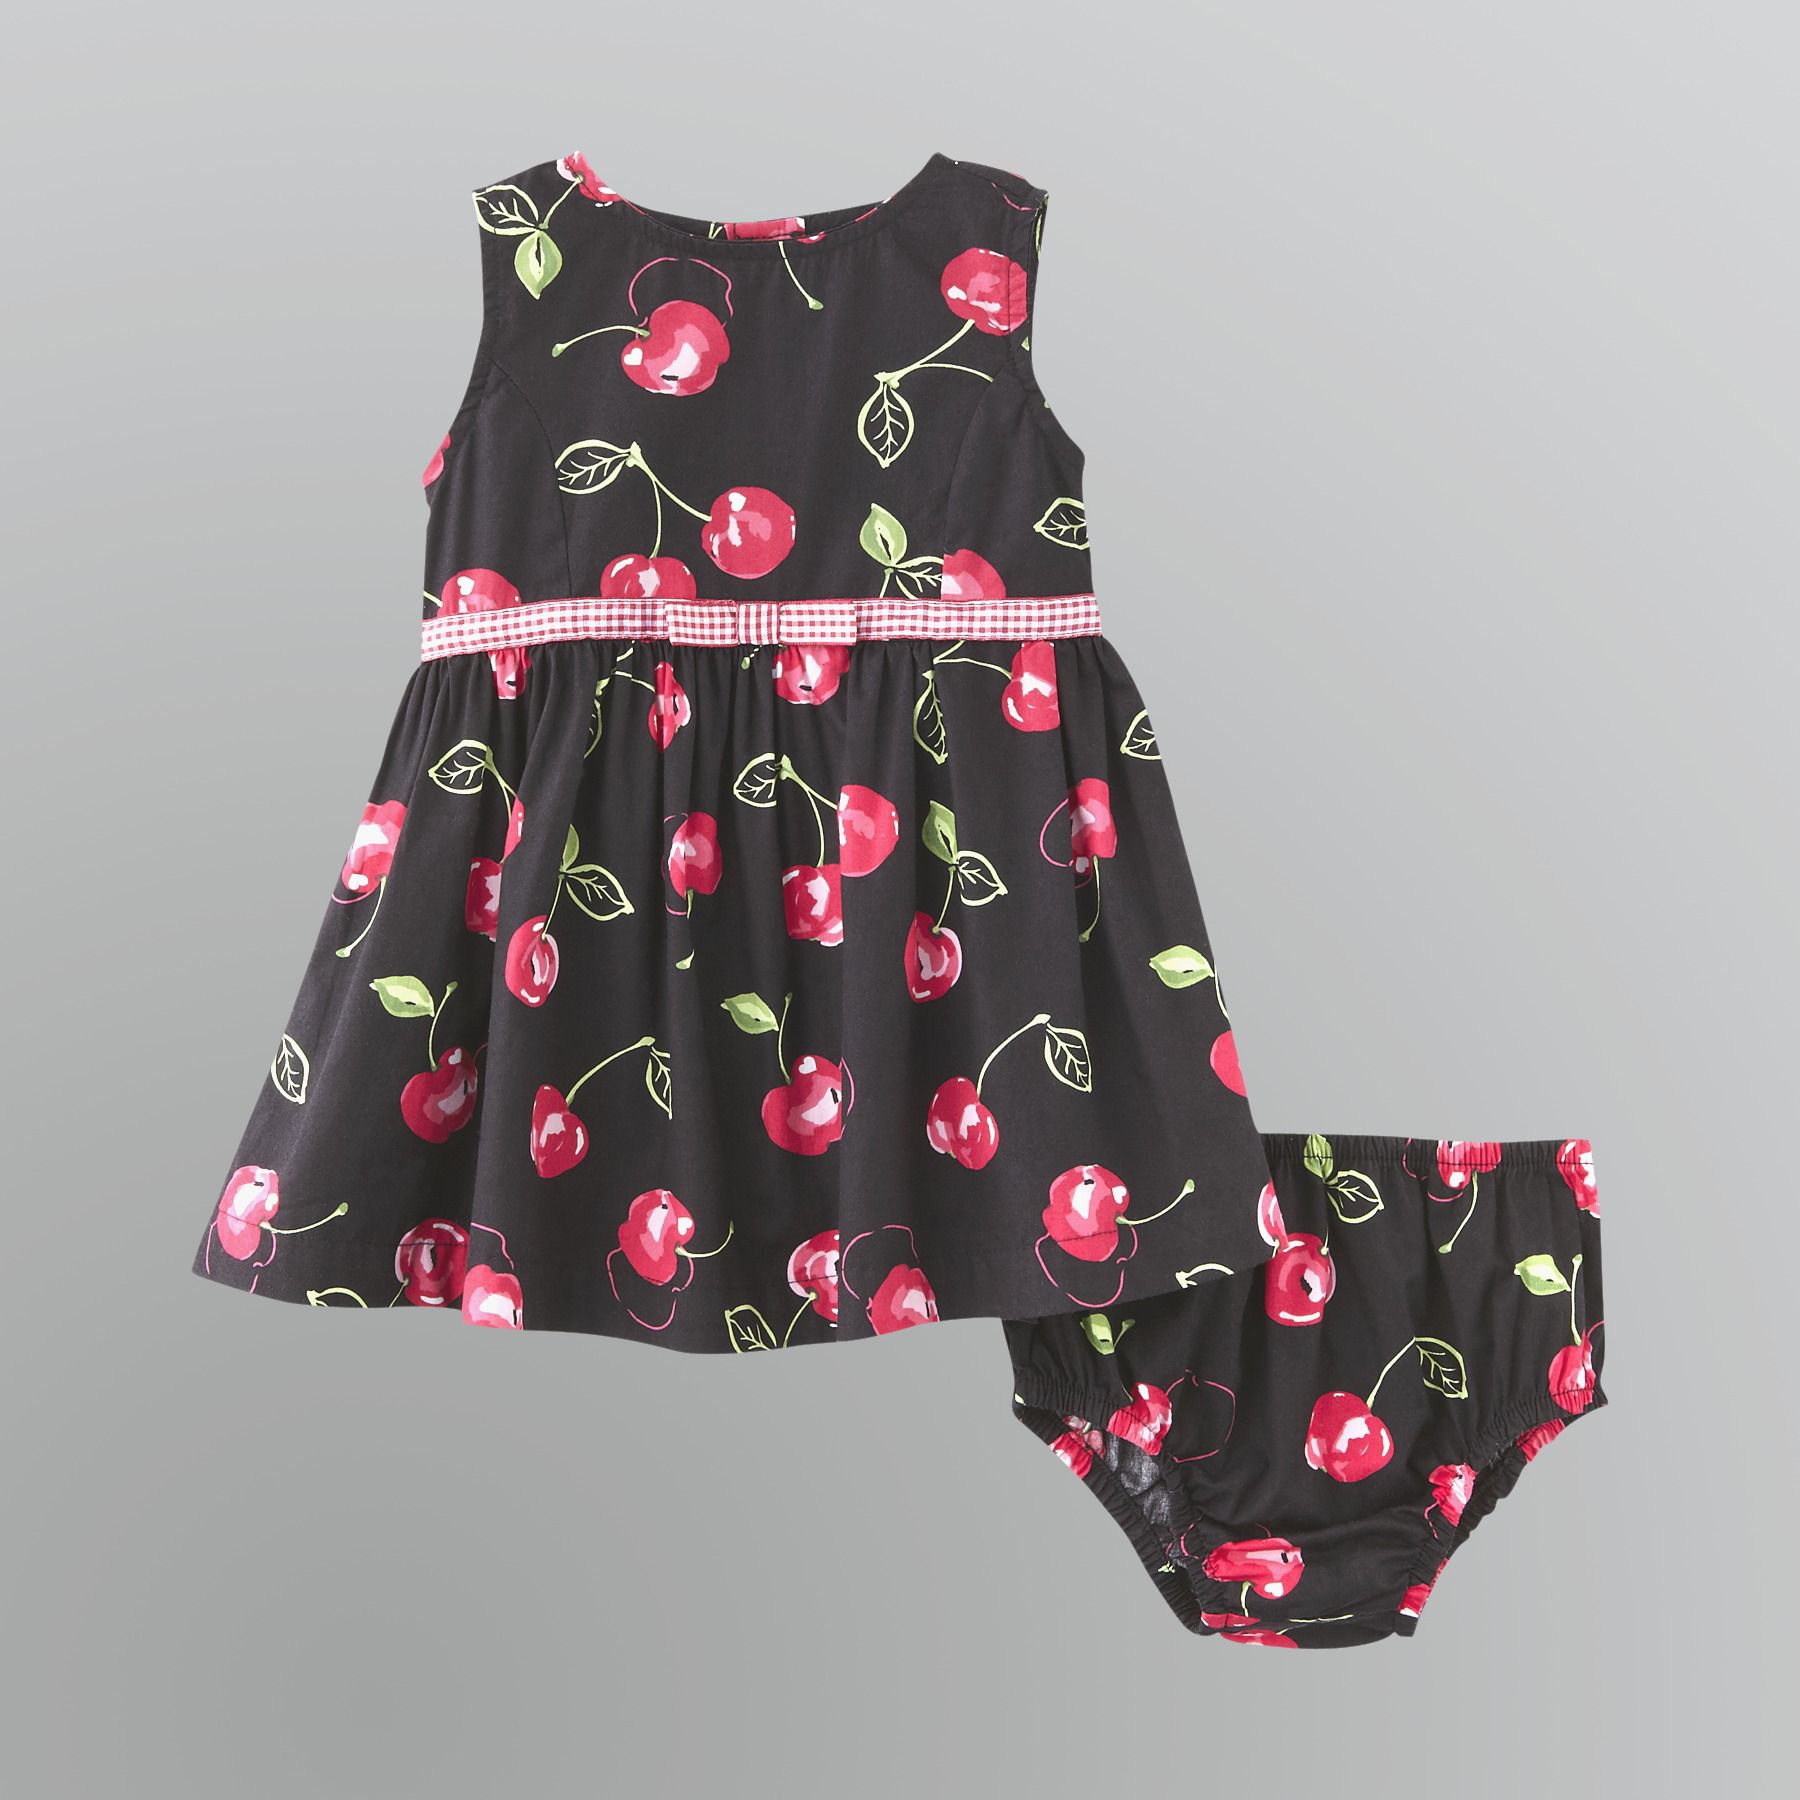 WonderKids Infant and Toddler Girl's Cherry Print Dress